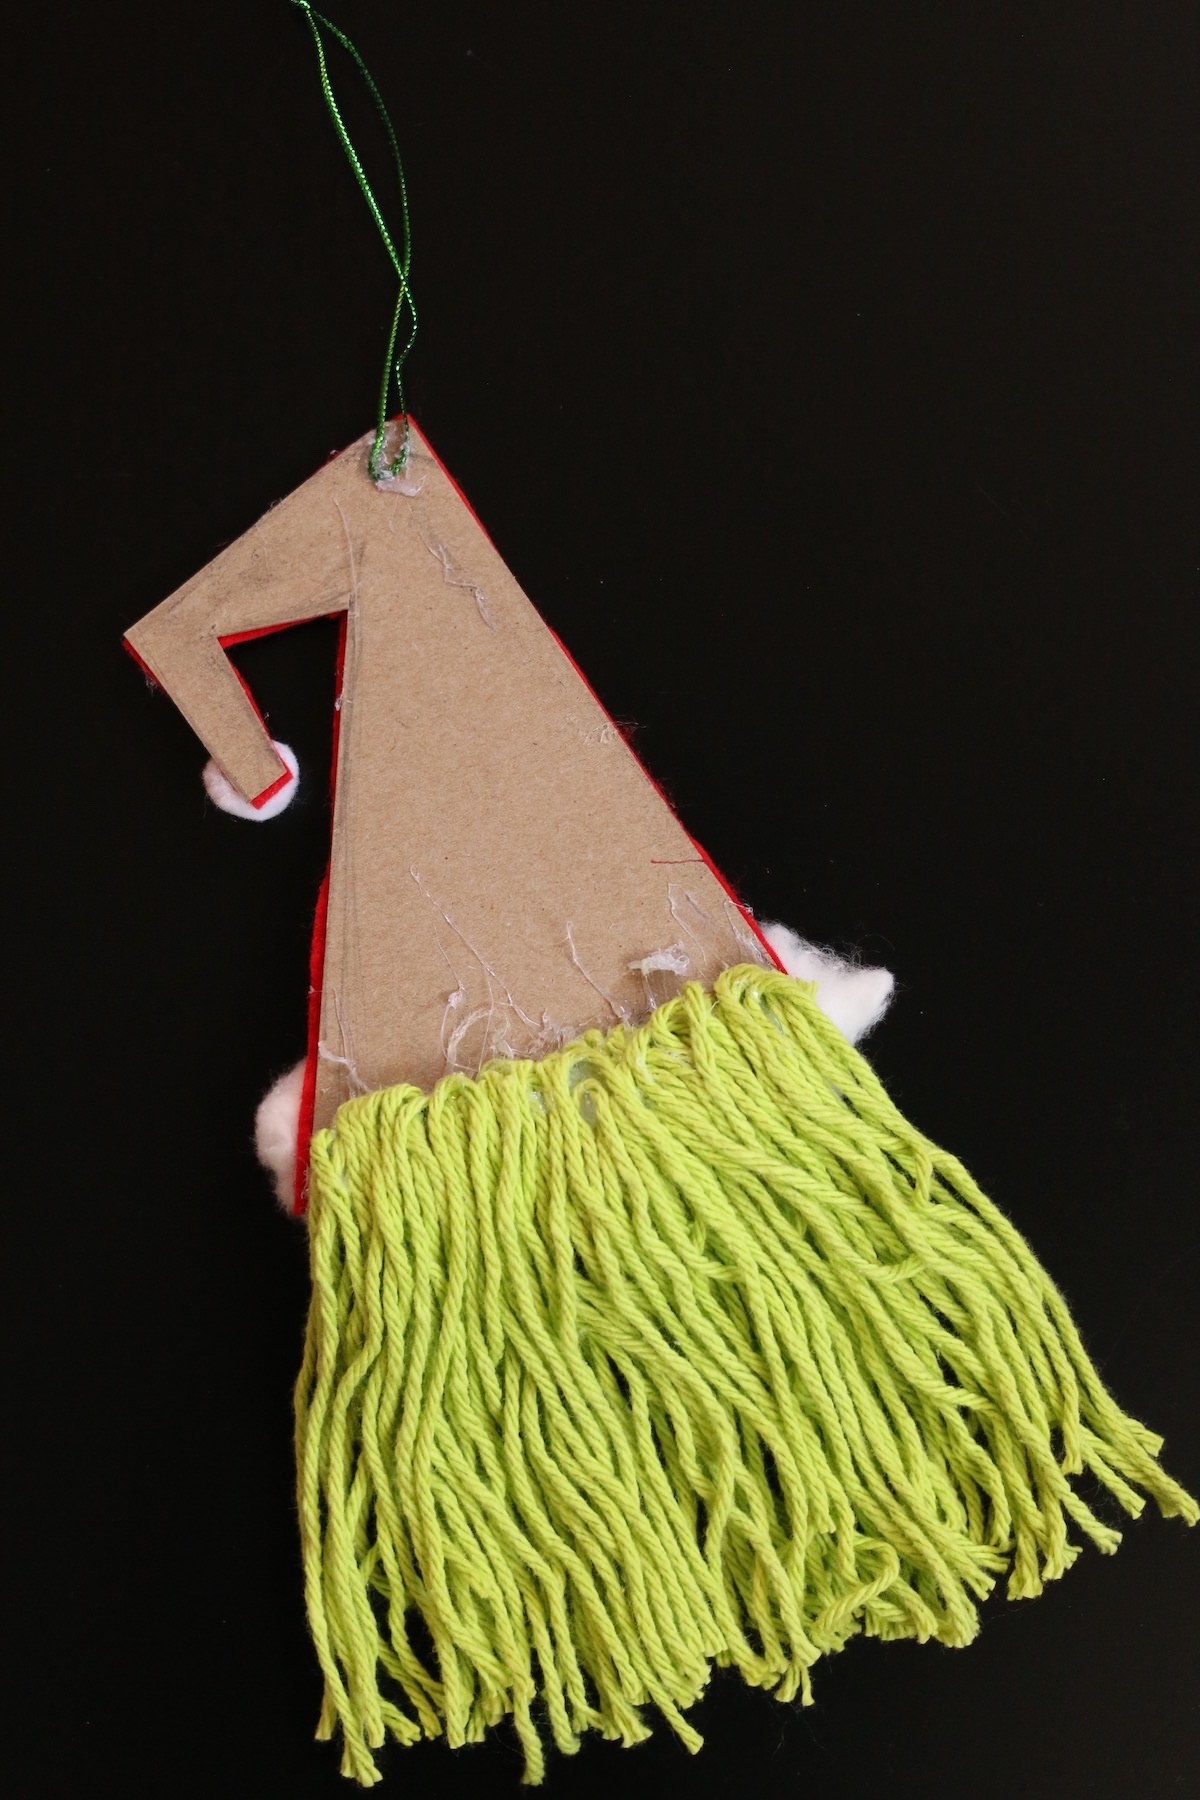 green yarn glued to back side of cardboard hat